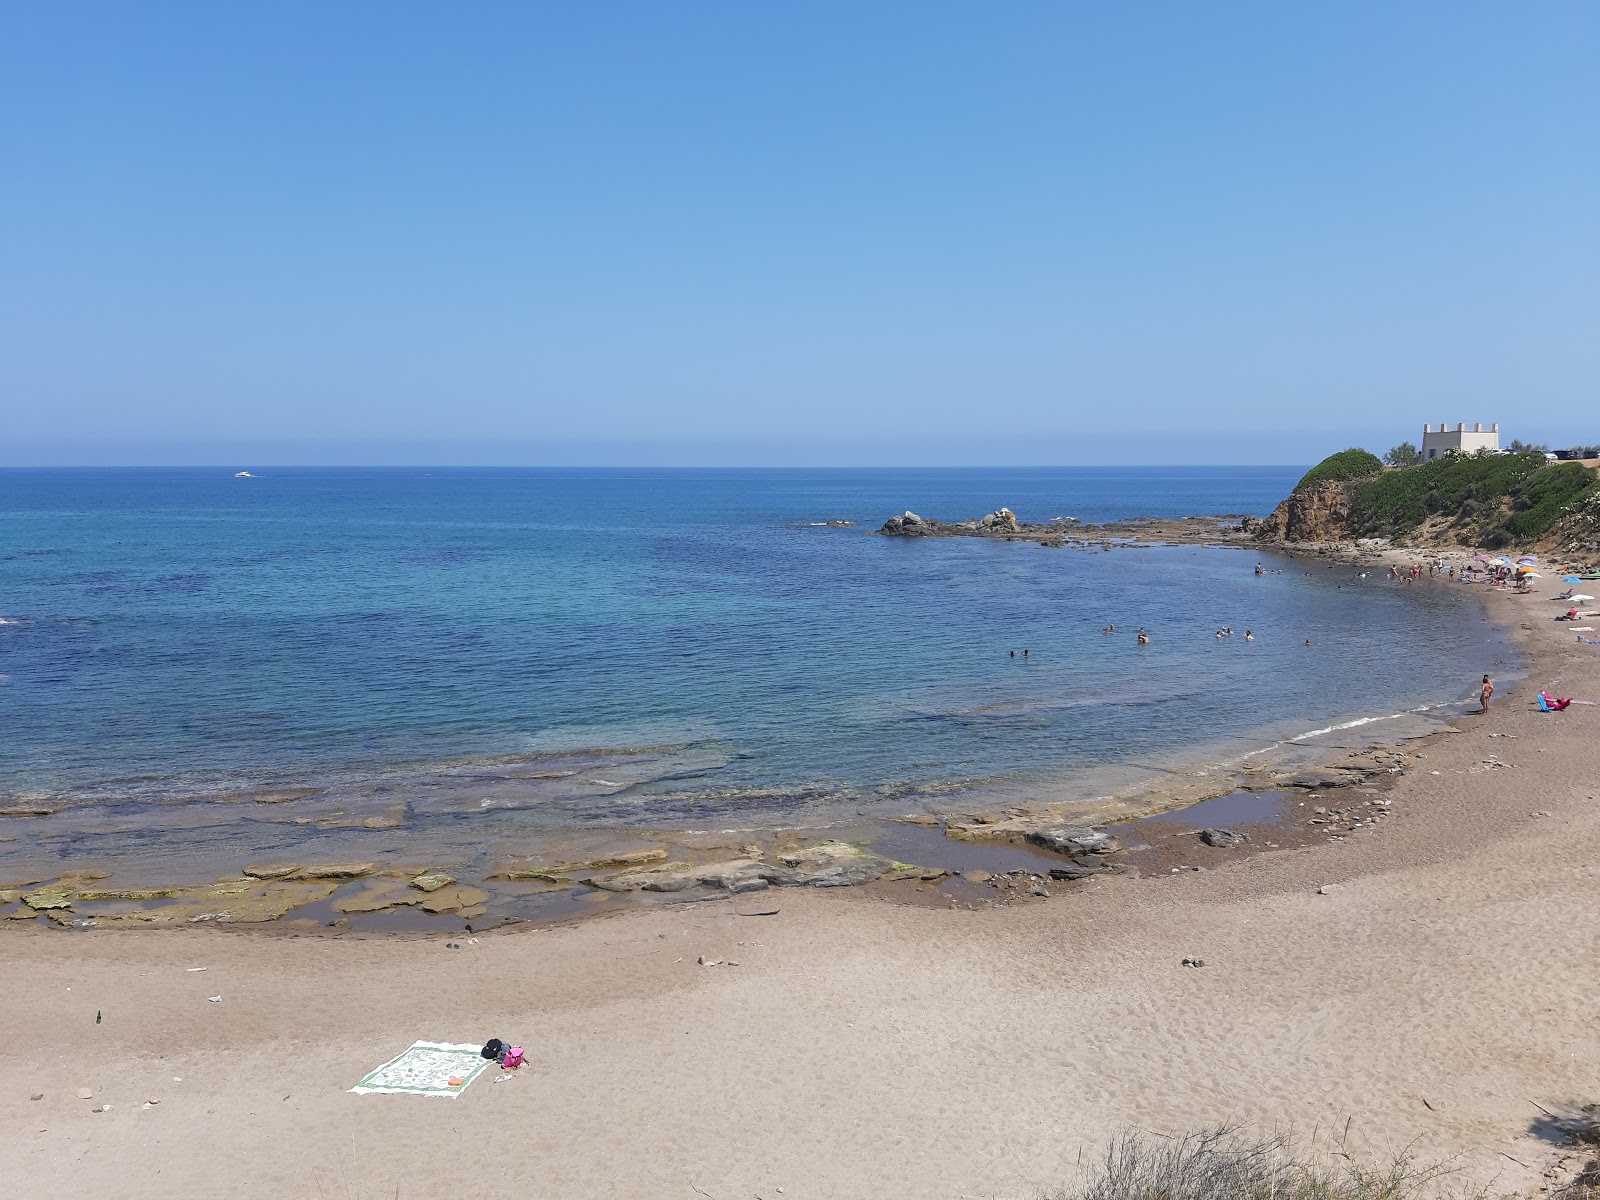 Foto von Spiaggia Di Settefrati mit heller sand Oberfläche